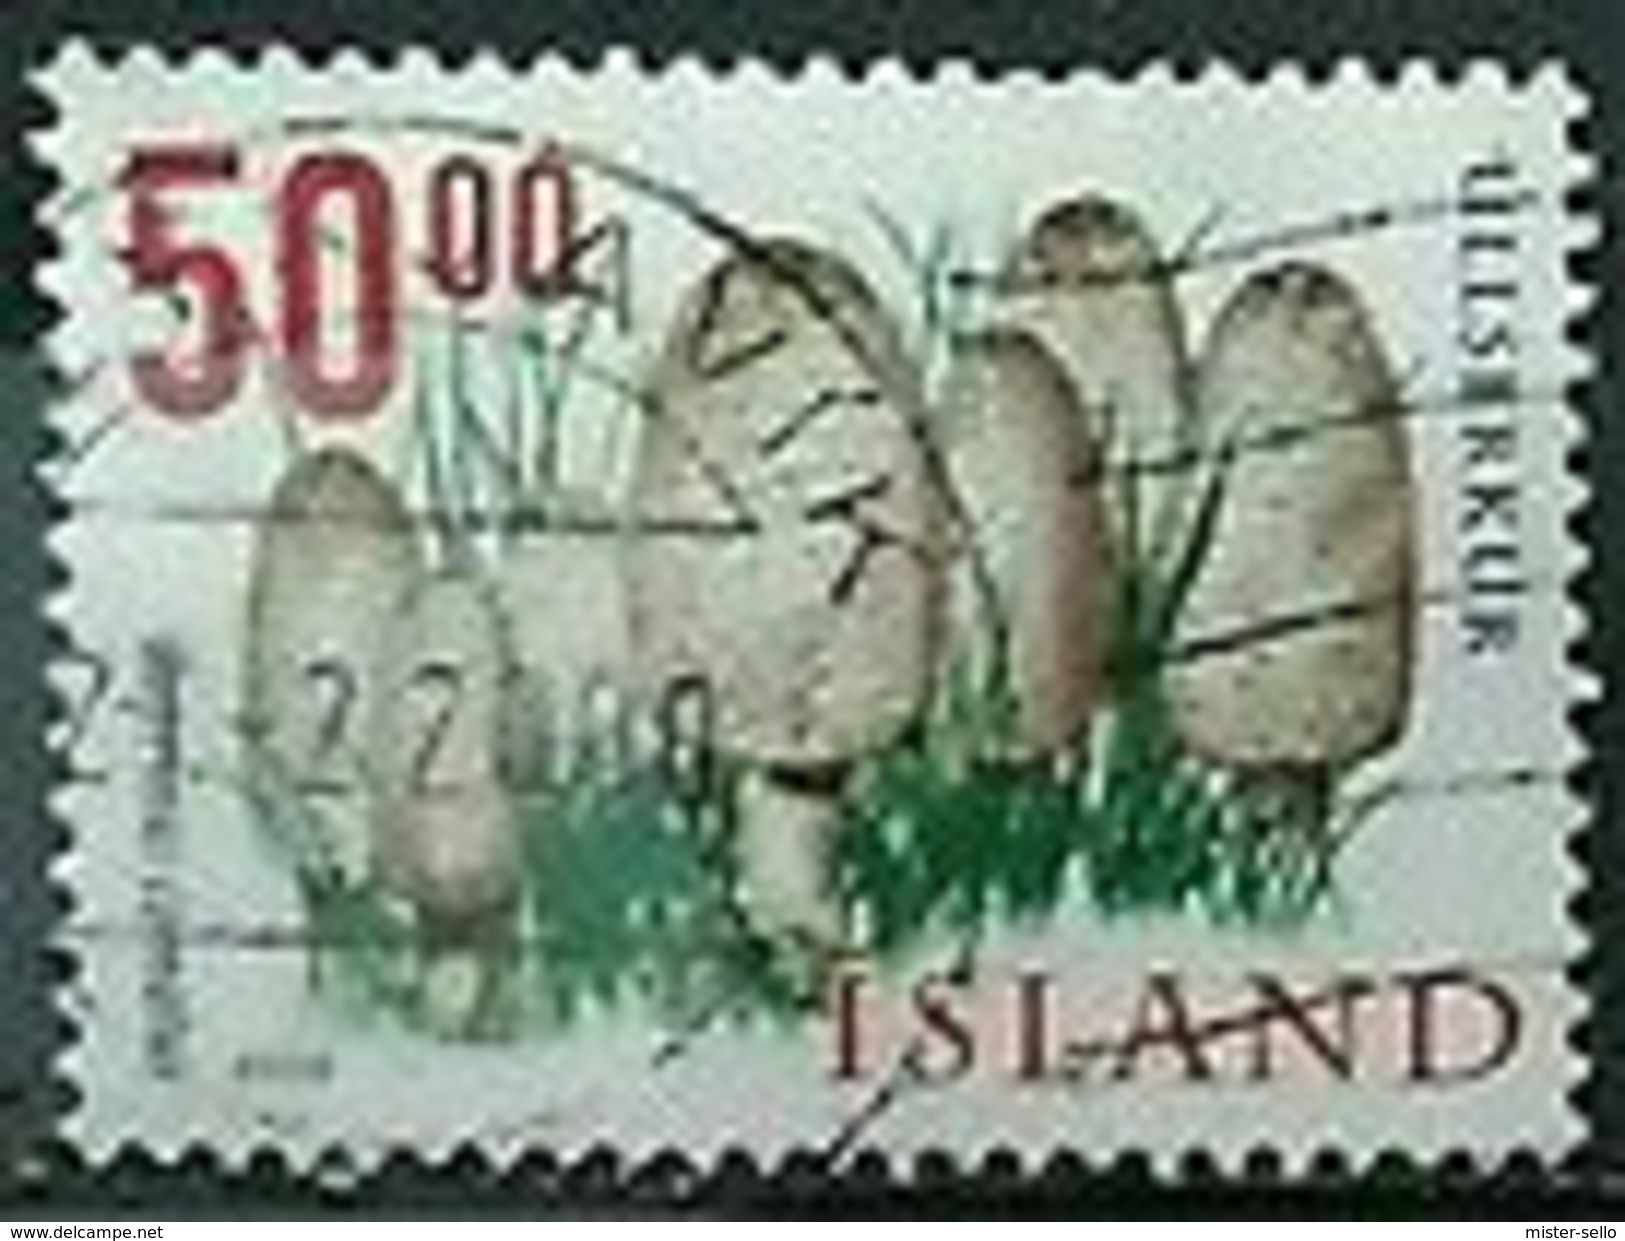 ISLANDIA 2000 Setas Comestibles. C. USADO - USED. - Used Stamps